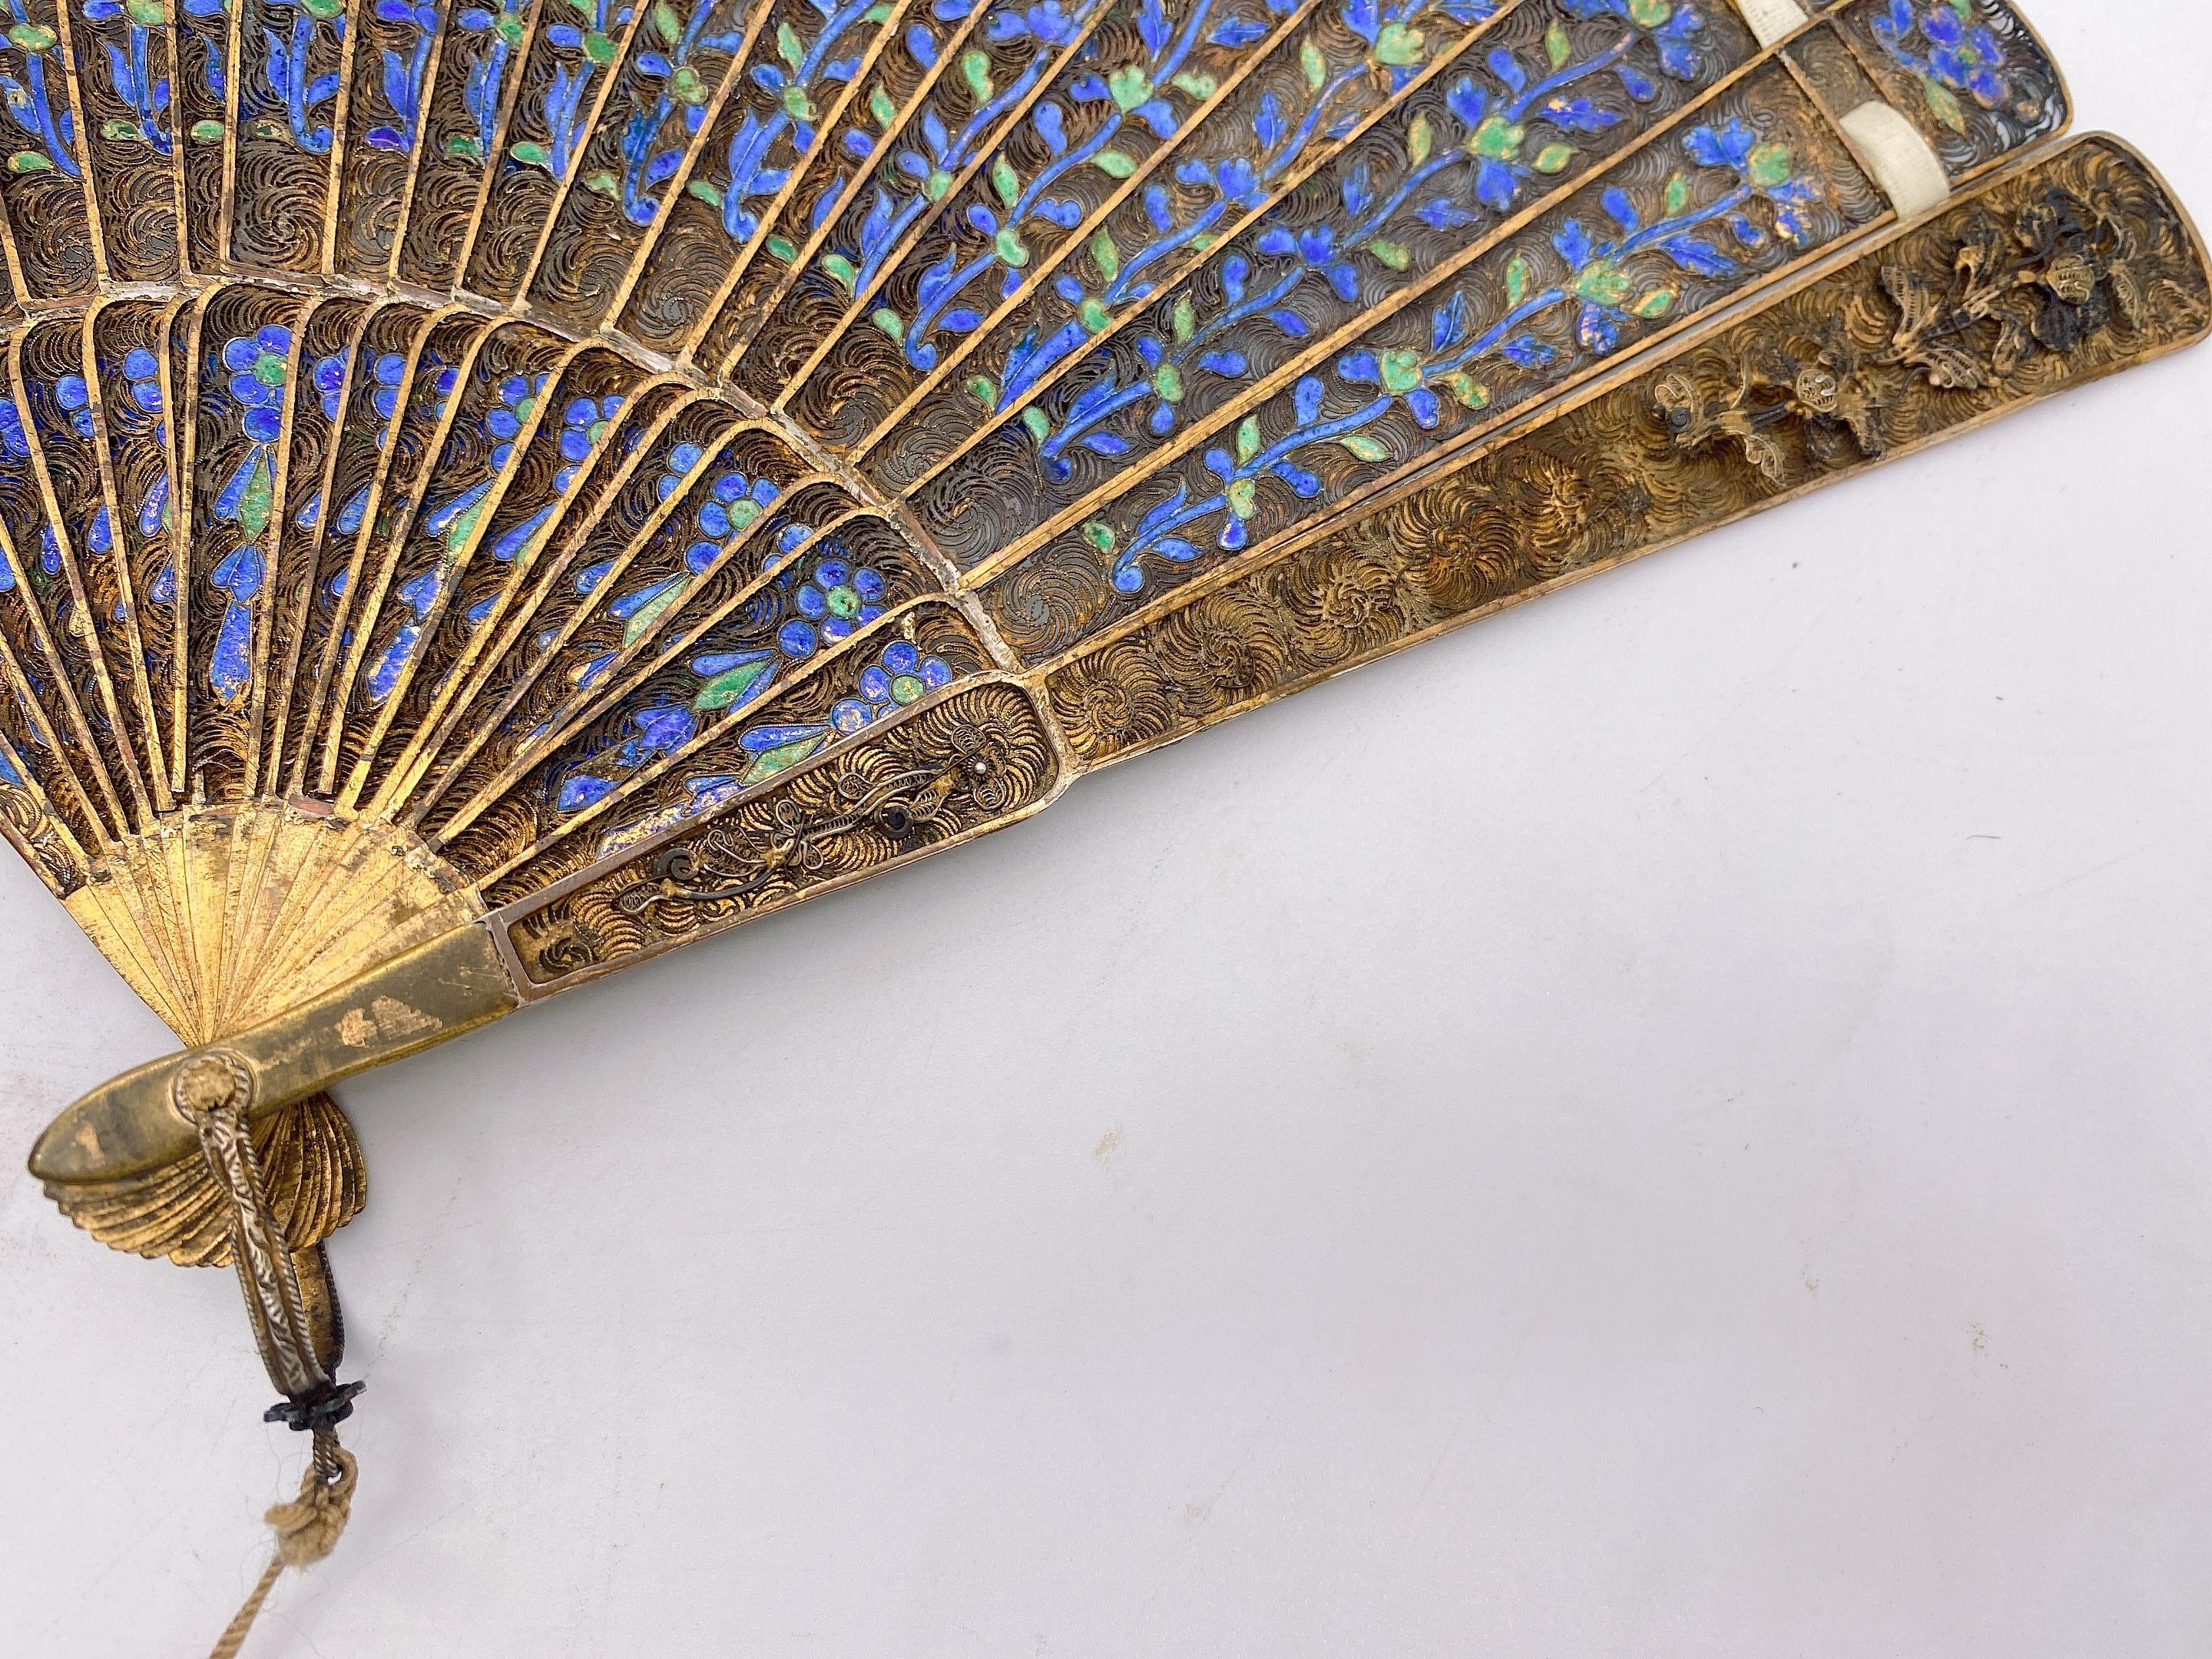 Rare Unique 17th Century Chinese Gilt Silver Filigree and Enamel Brise Fan For Sale 1